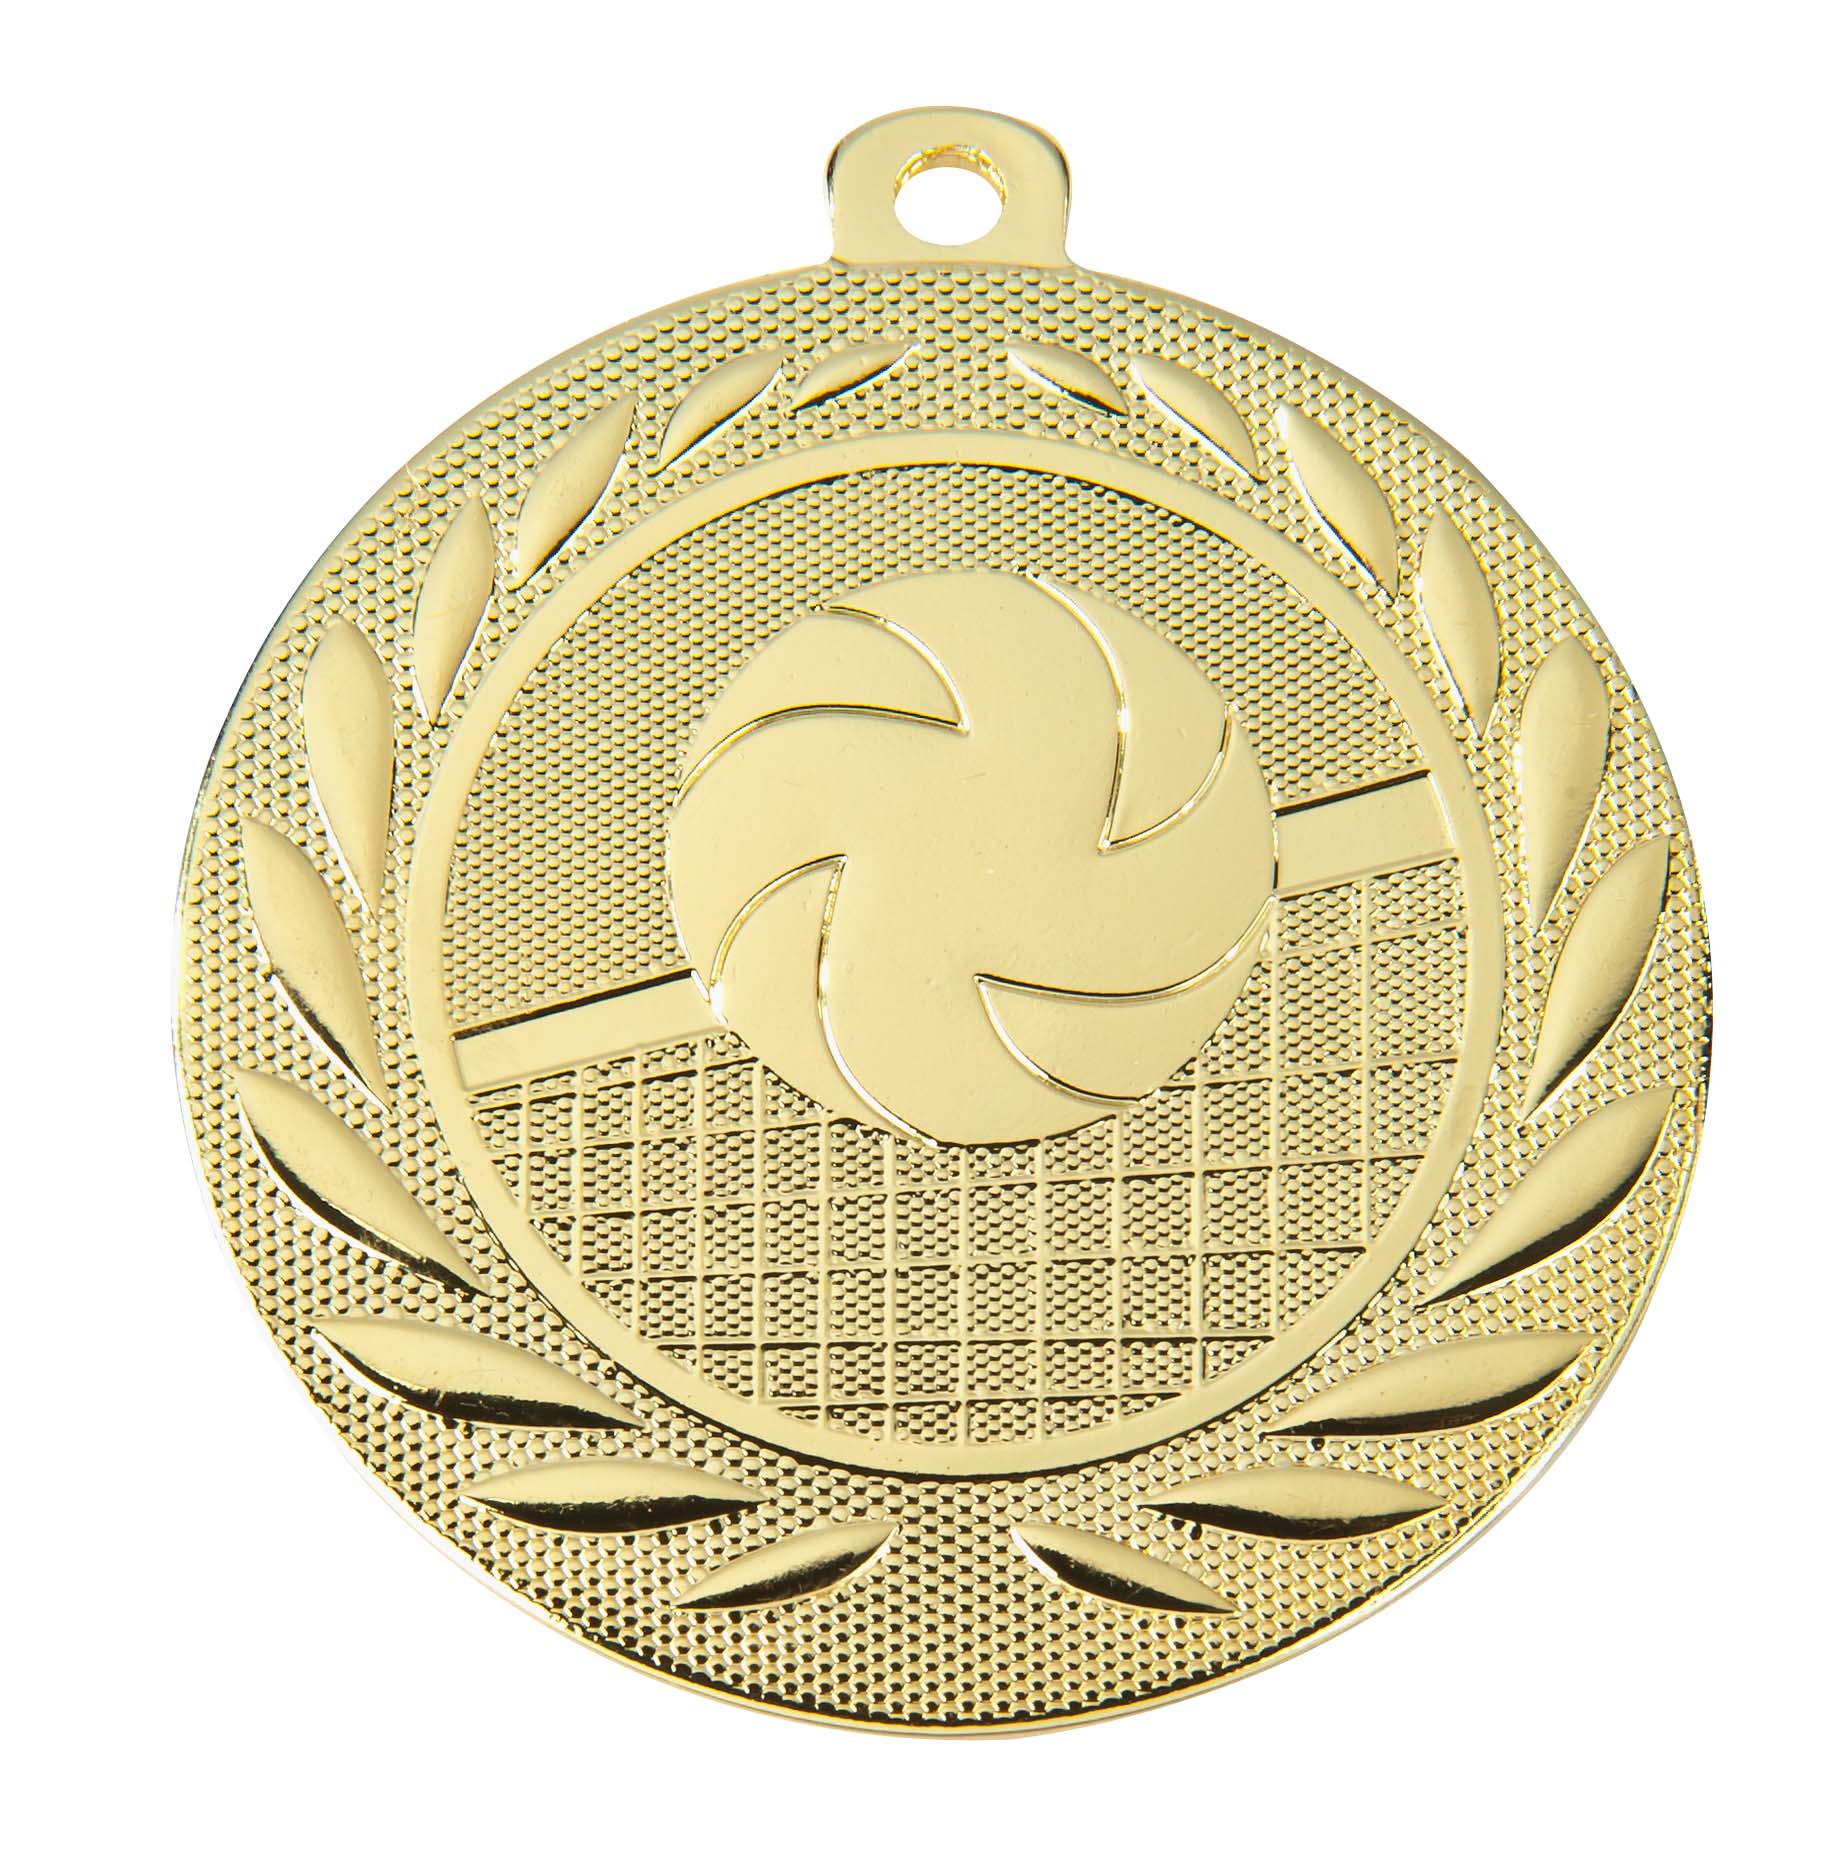 Volleyball-Medaille DI5000N inkl. Band und Beschriftung Gold Unmontiert